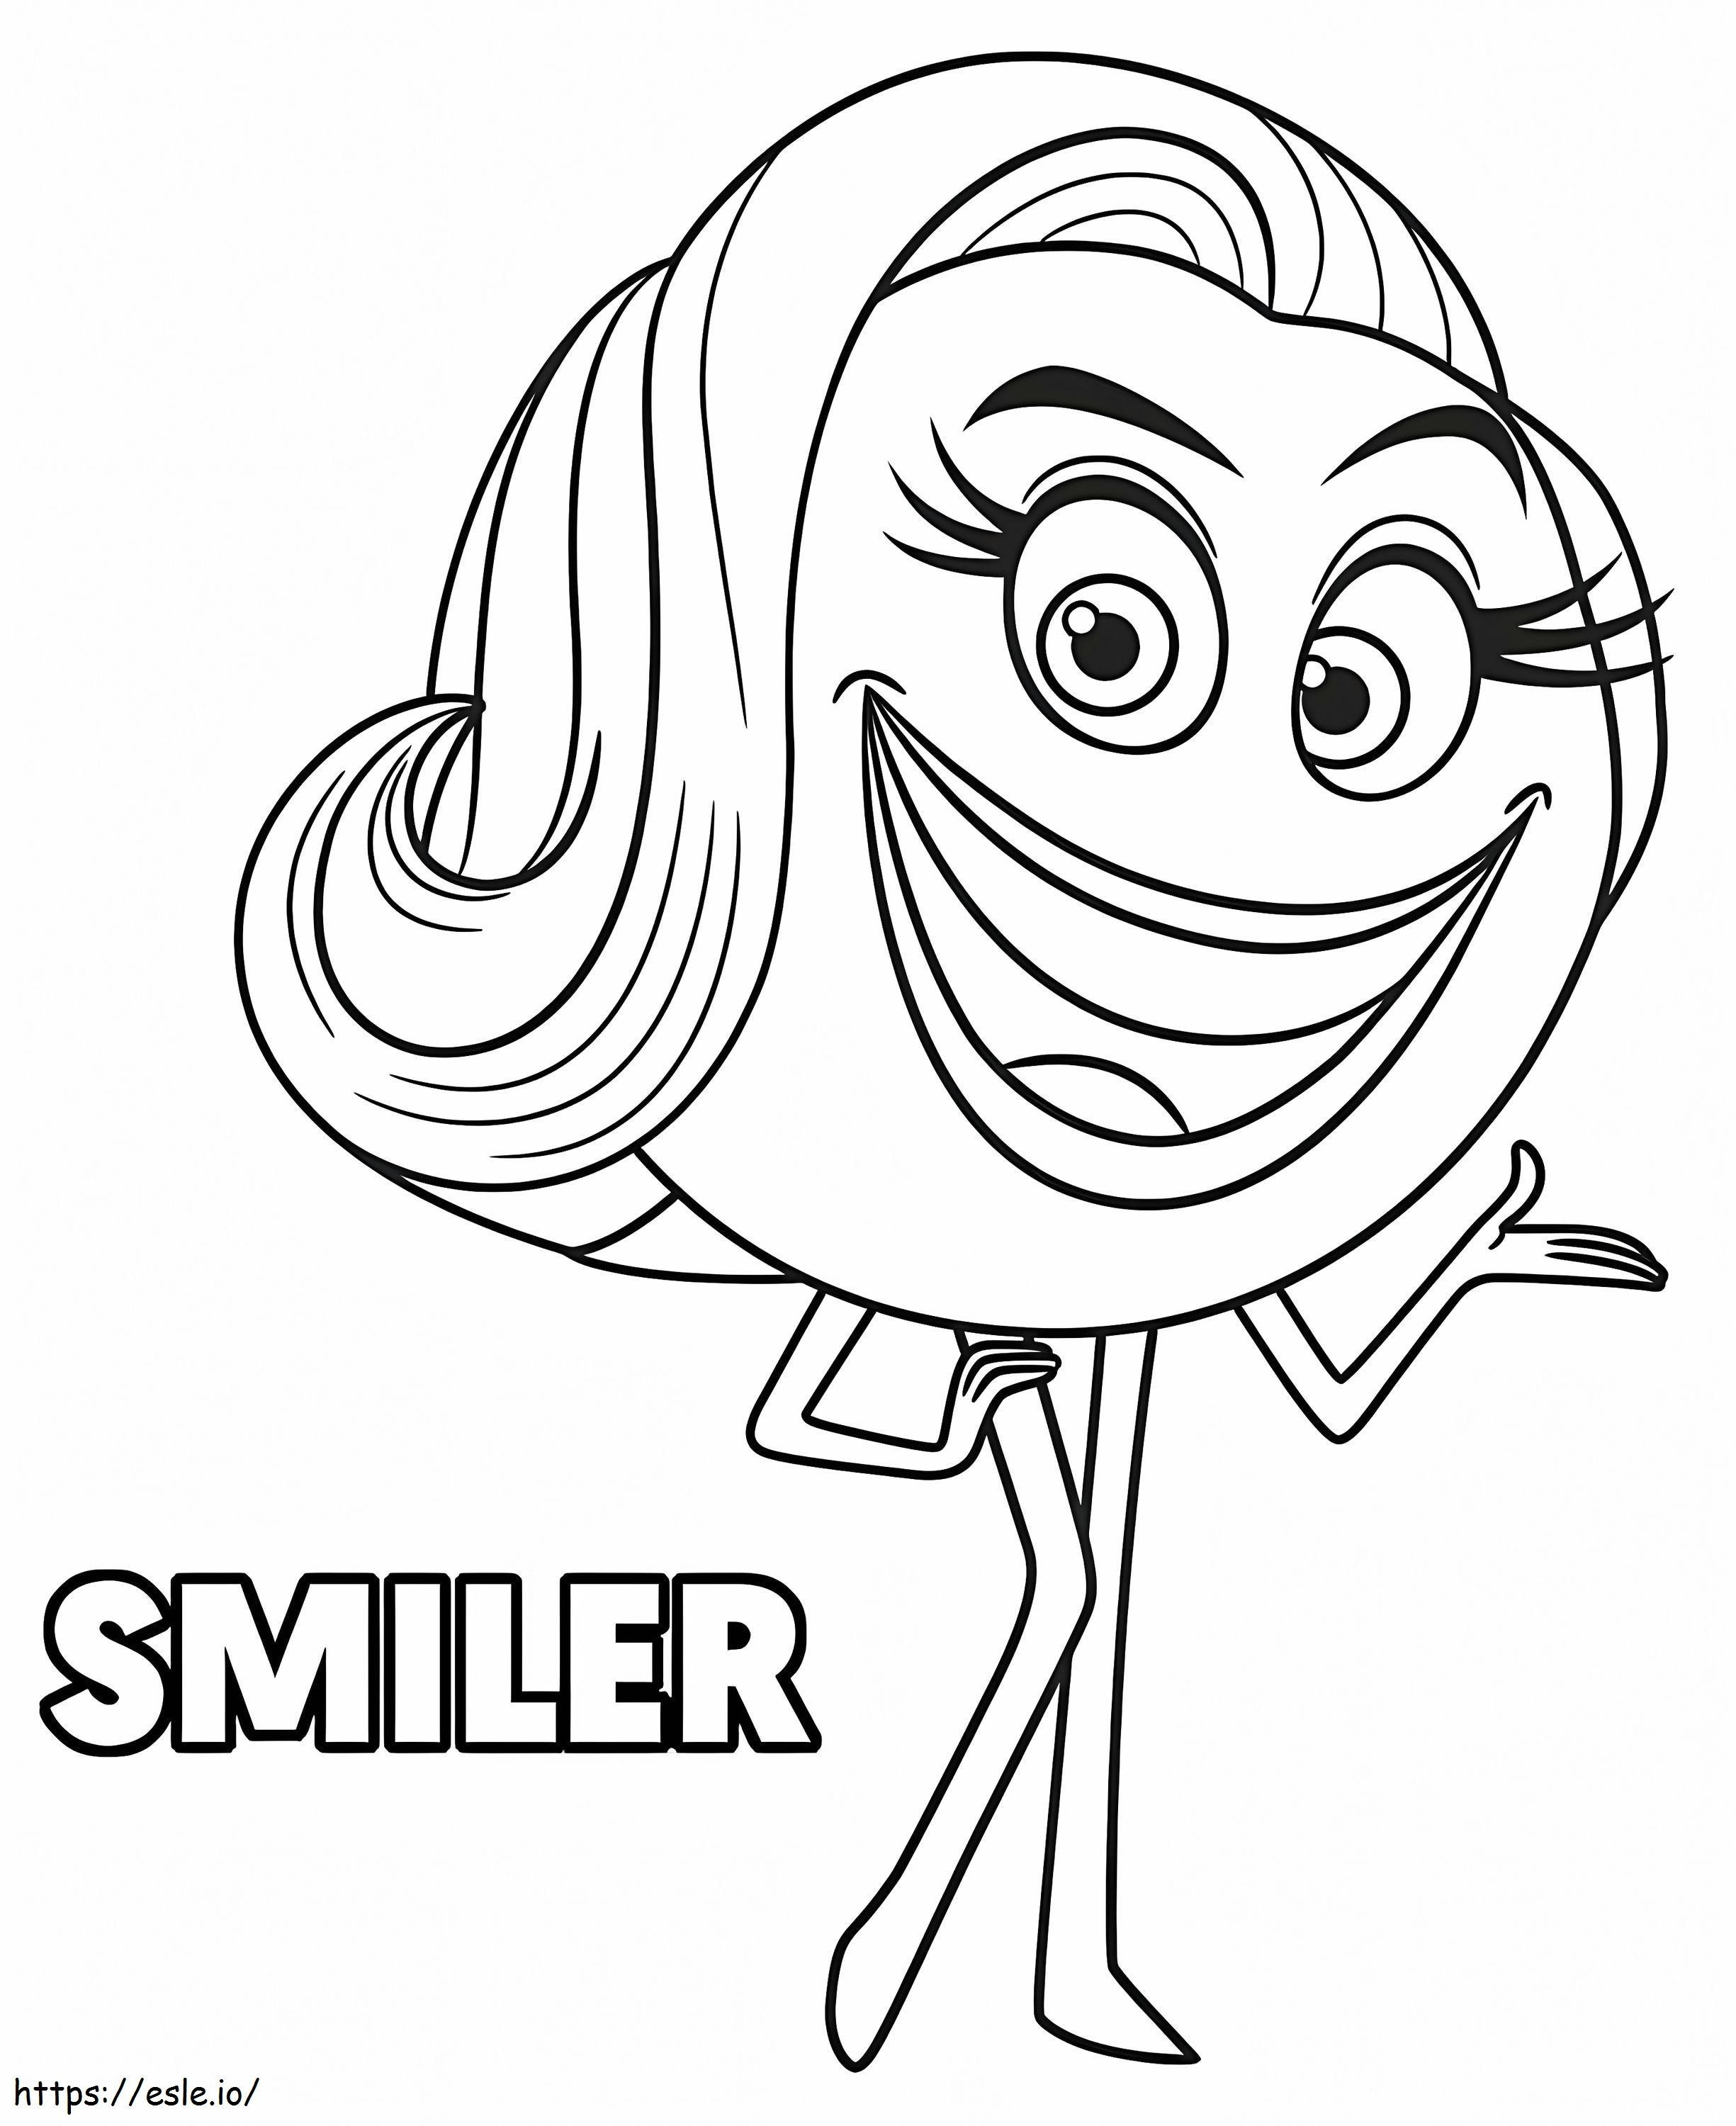 Smiler no filme Emoji para colorir